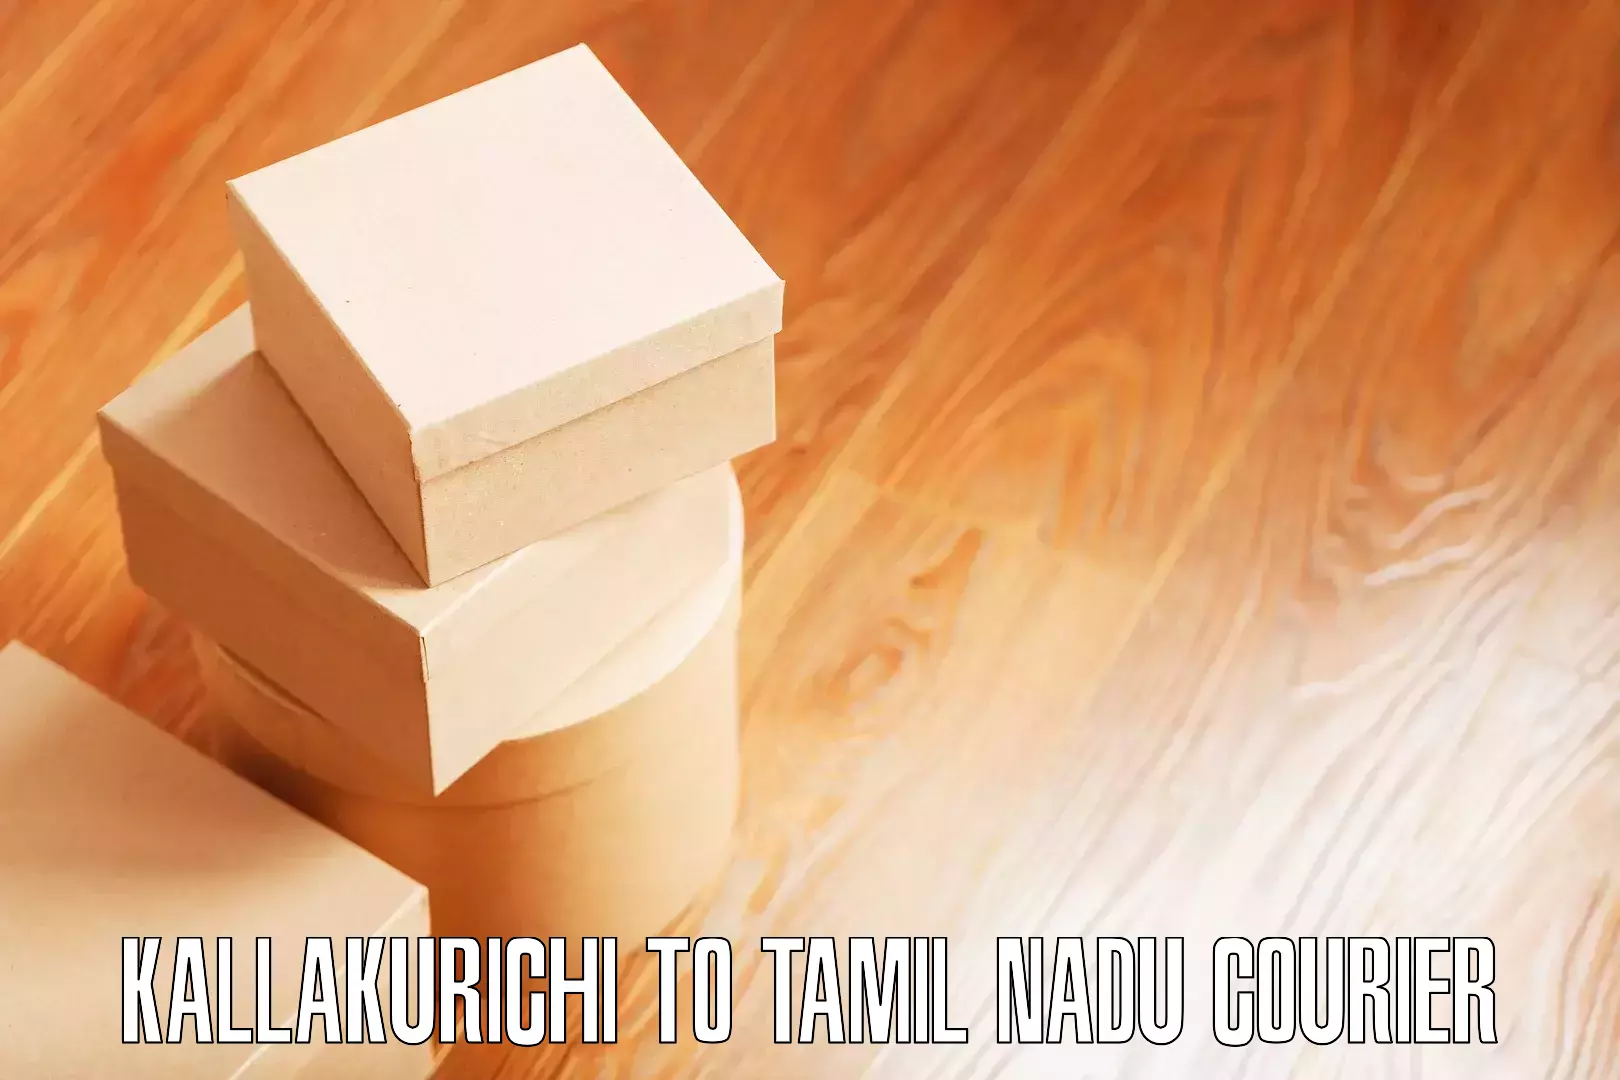 Cost-effective moving solutions Kallakurichi to Melmaruvathur